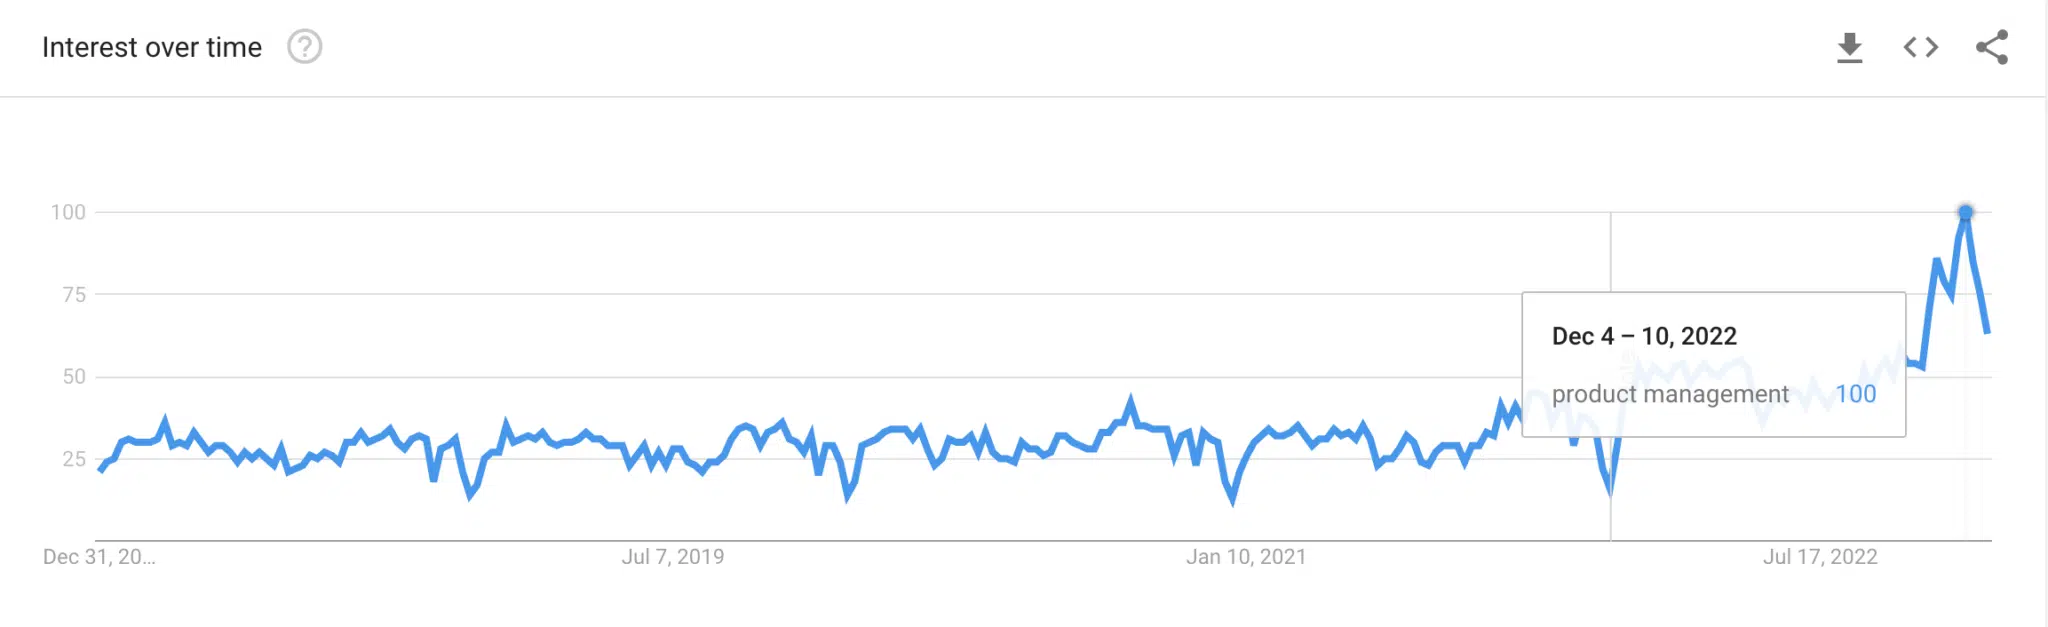 Google Trends - "product management"